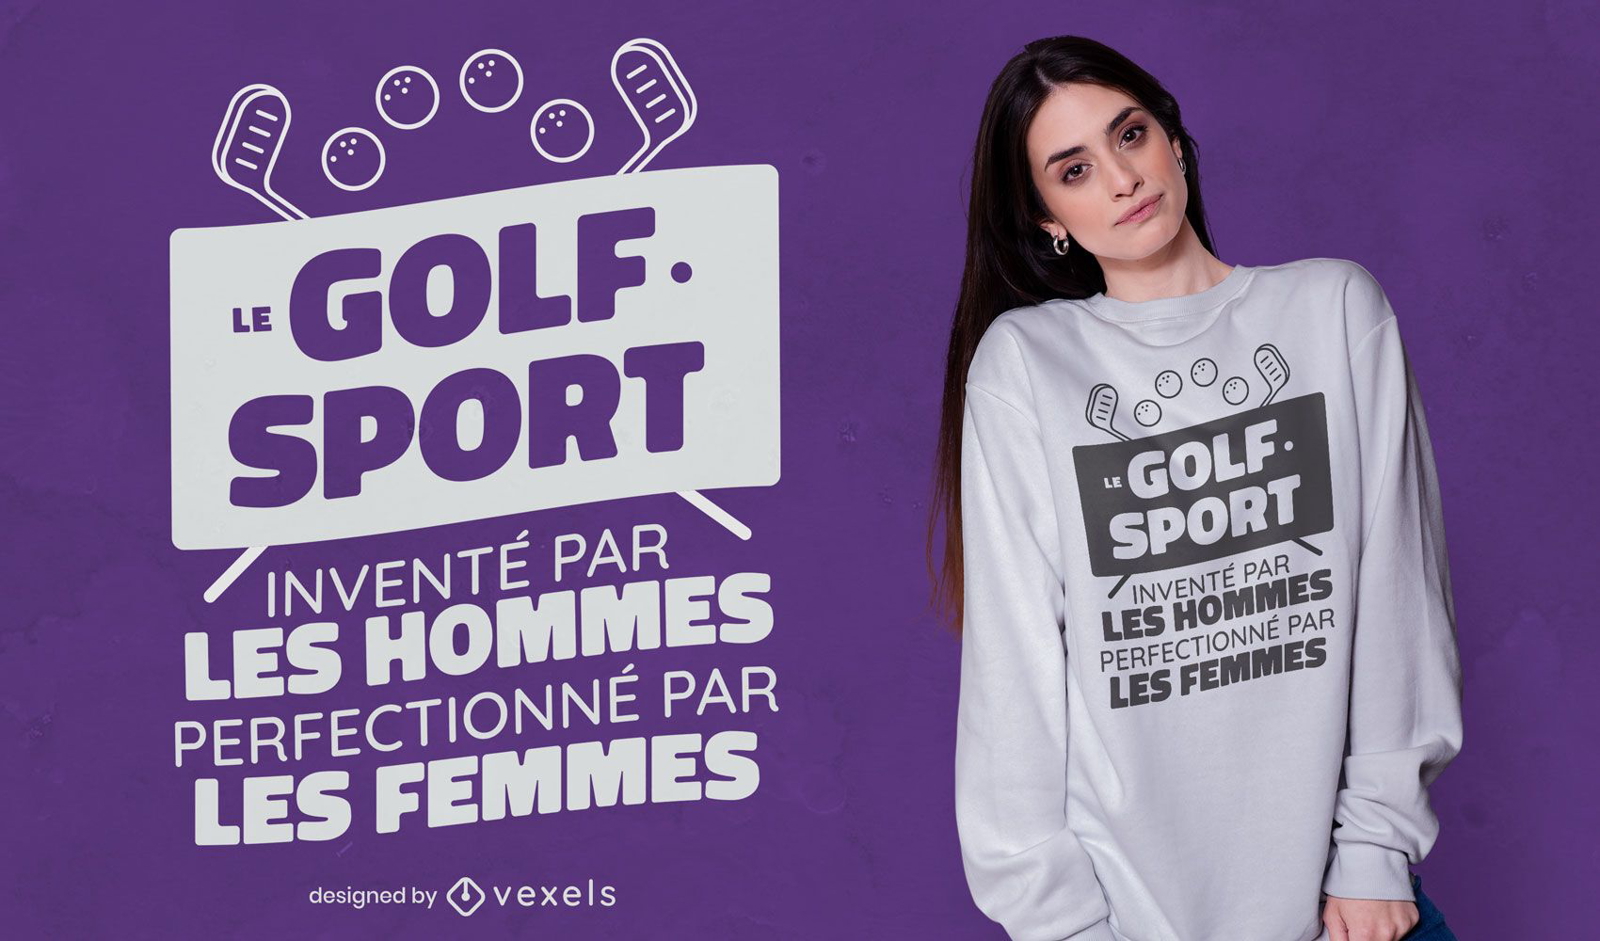 Golfe aperfei?oado pelo design de camisetas femininas